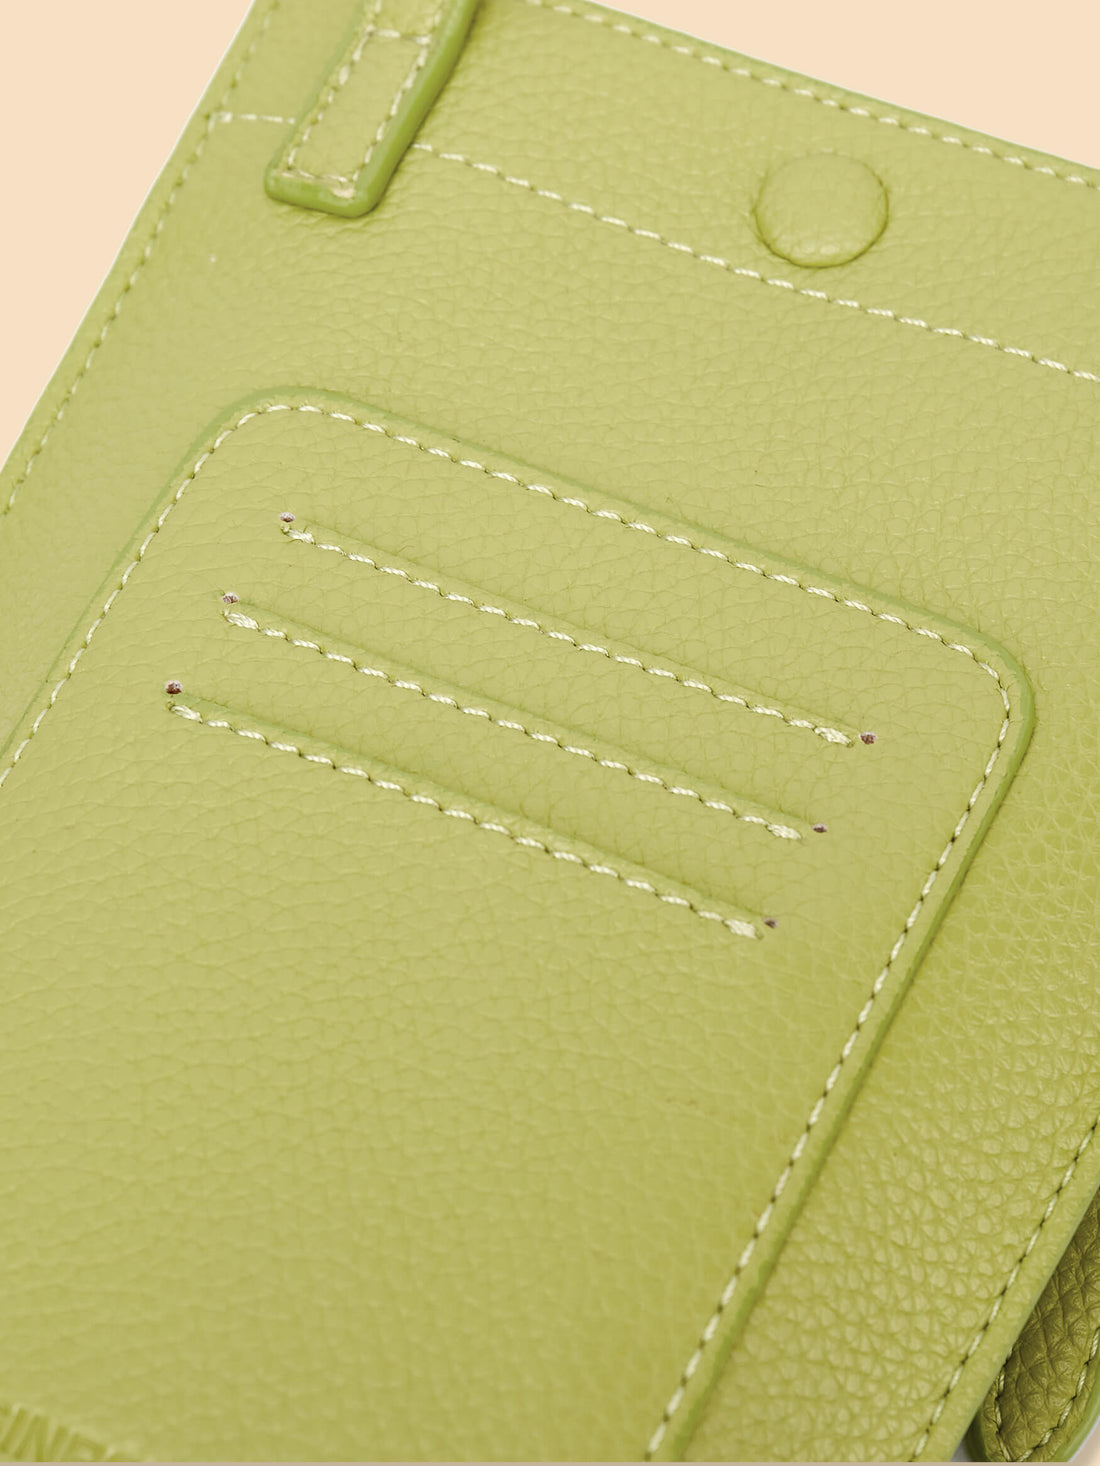 SINBONO Lime Green Crossbody Bag- High-quality Soft Vegan Leather Bag